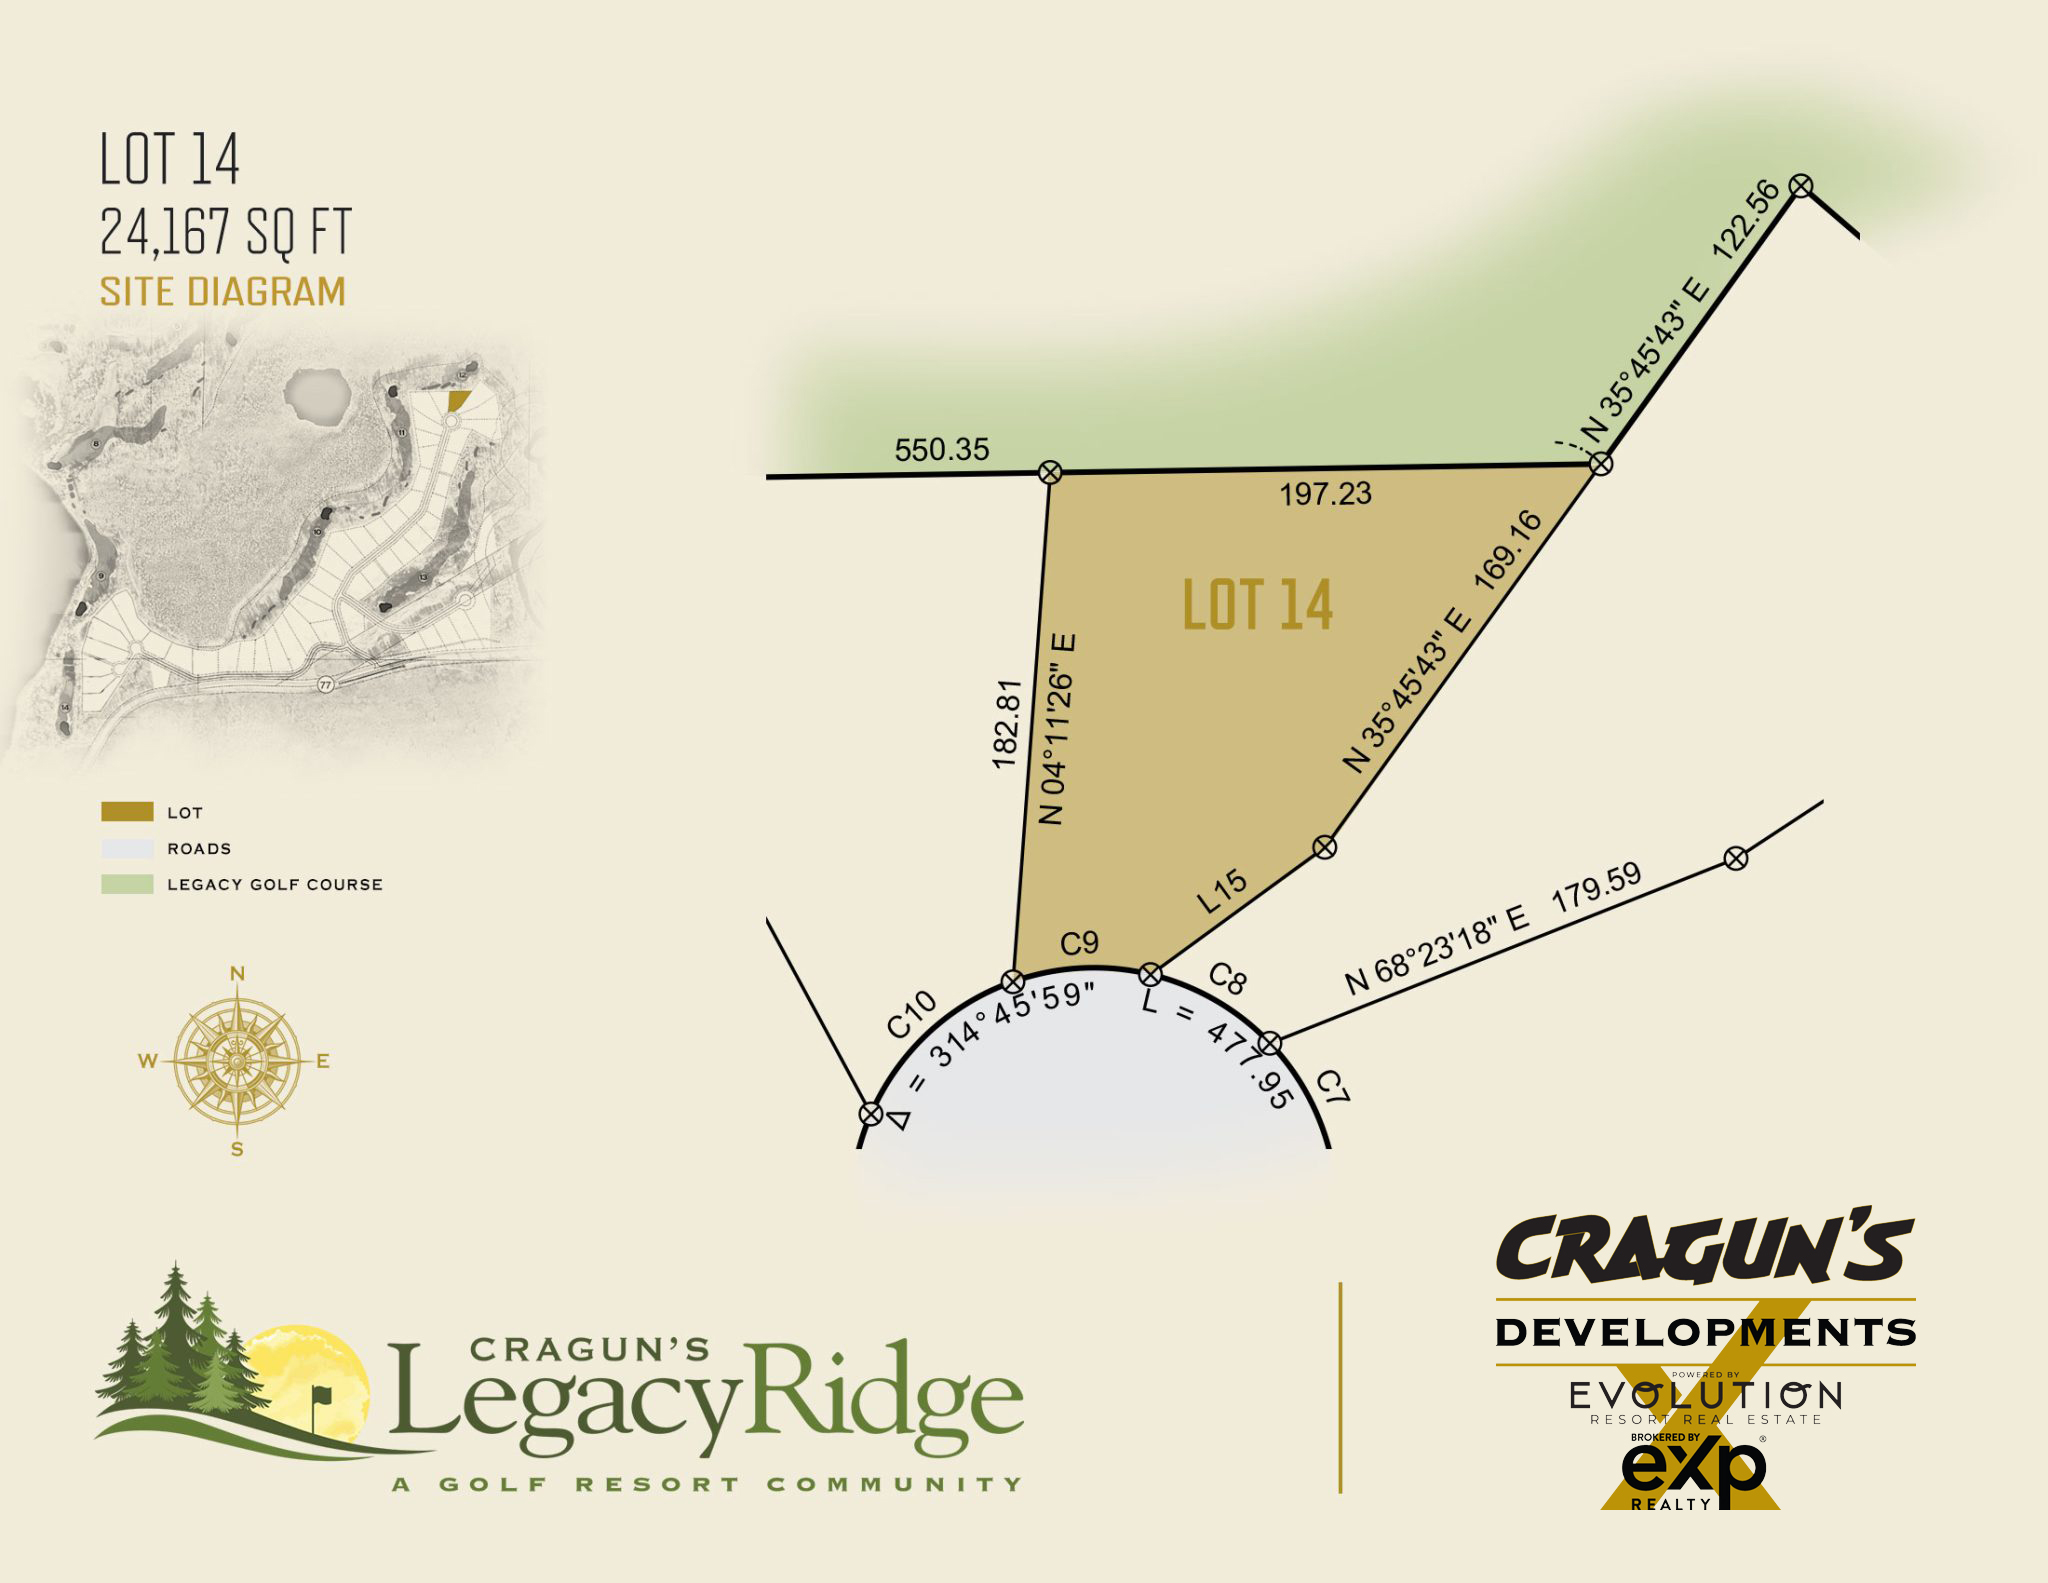 Legacy Ridge Lot 14 at Cragun's Developments in Brainerd, MN